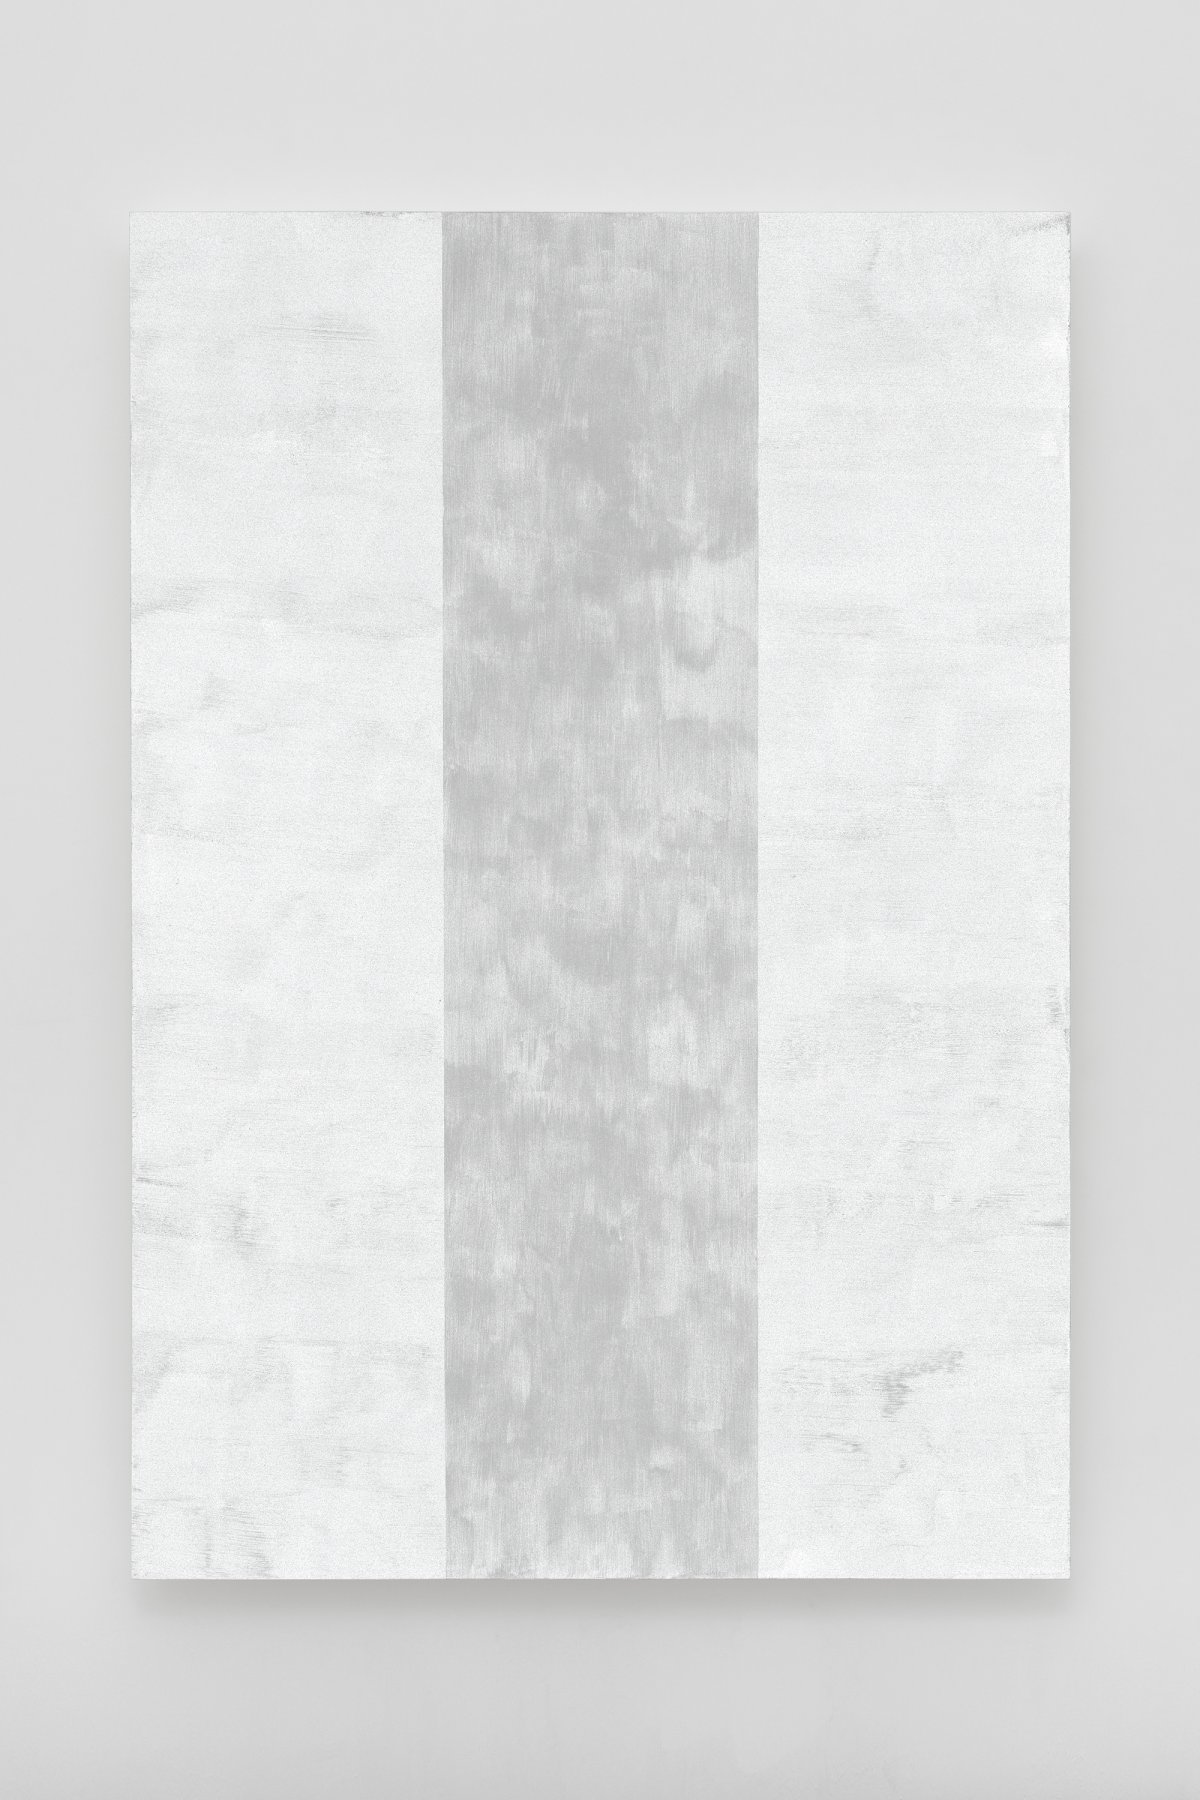 Mary Corse, Untitled (White Inner Band,  Beveled), 2023